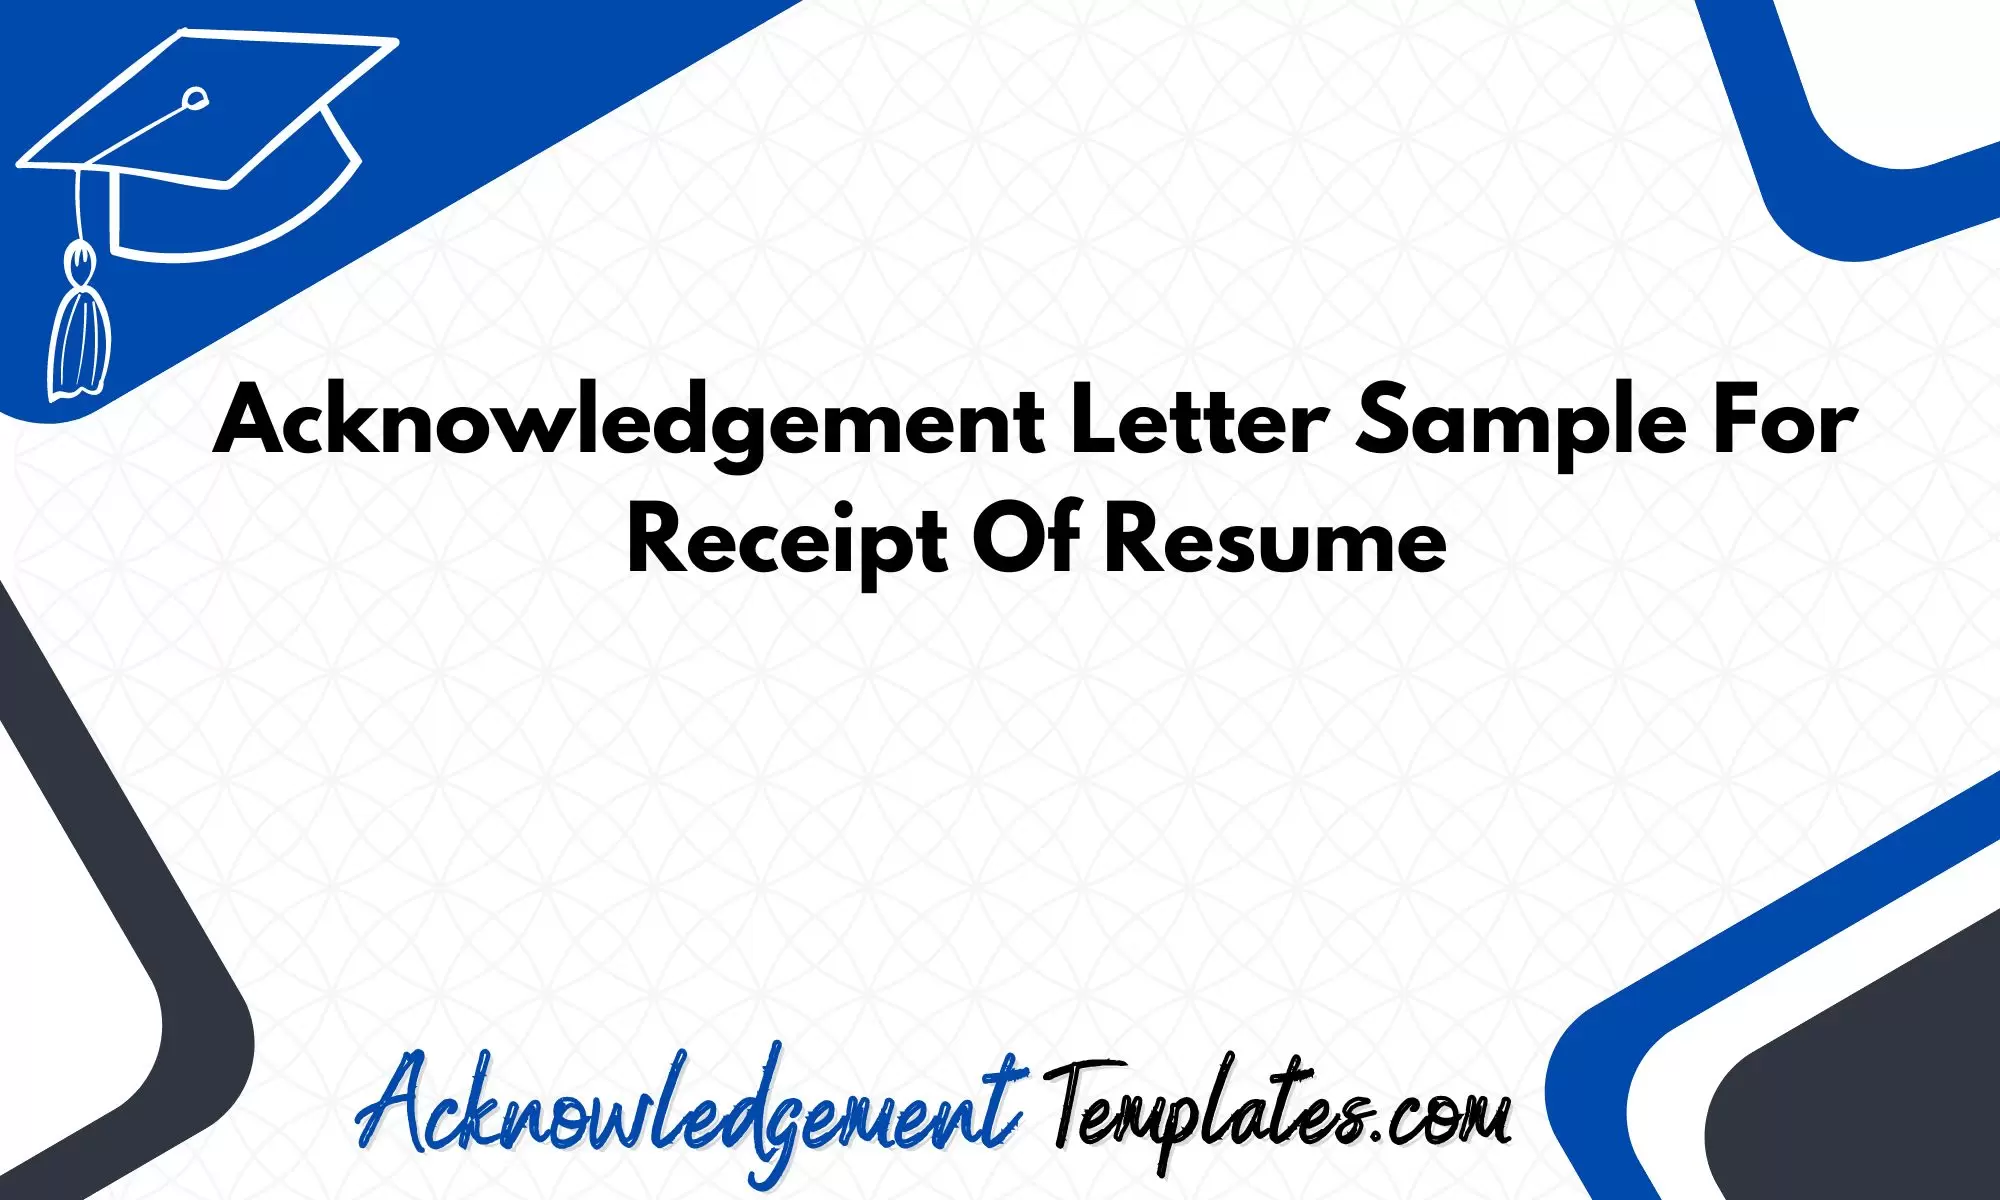 Acknowledgement Letter Sample For Receipt Of Resume